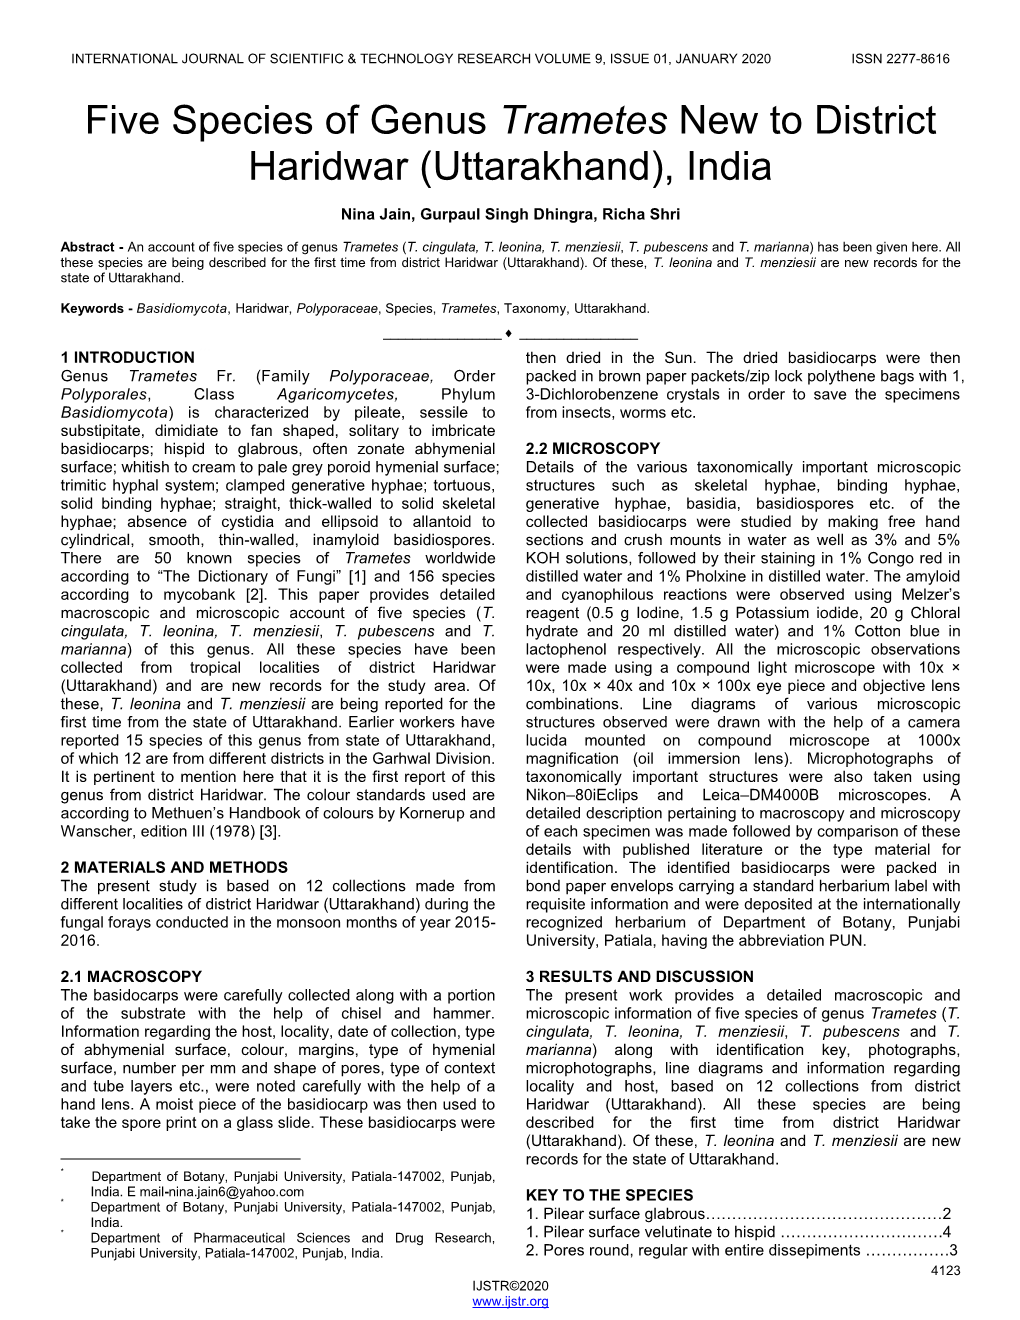 Five Species of Genus Trametes New to District Haridwar (Uttarakhand), India